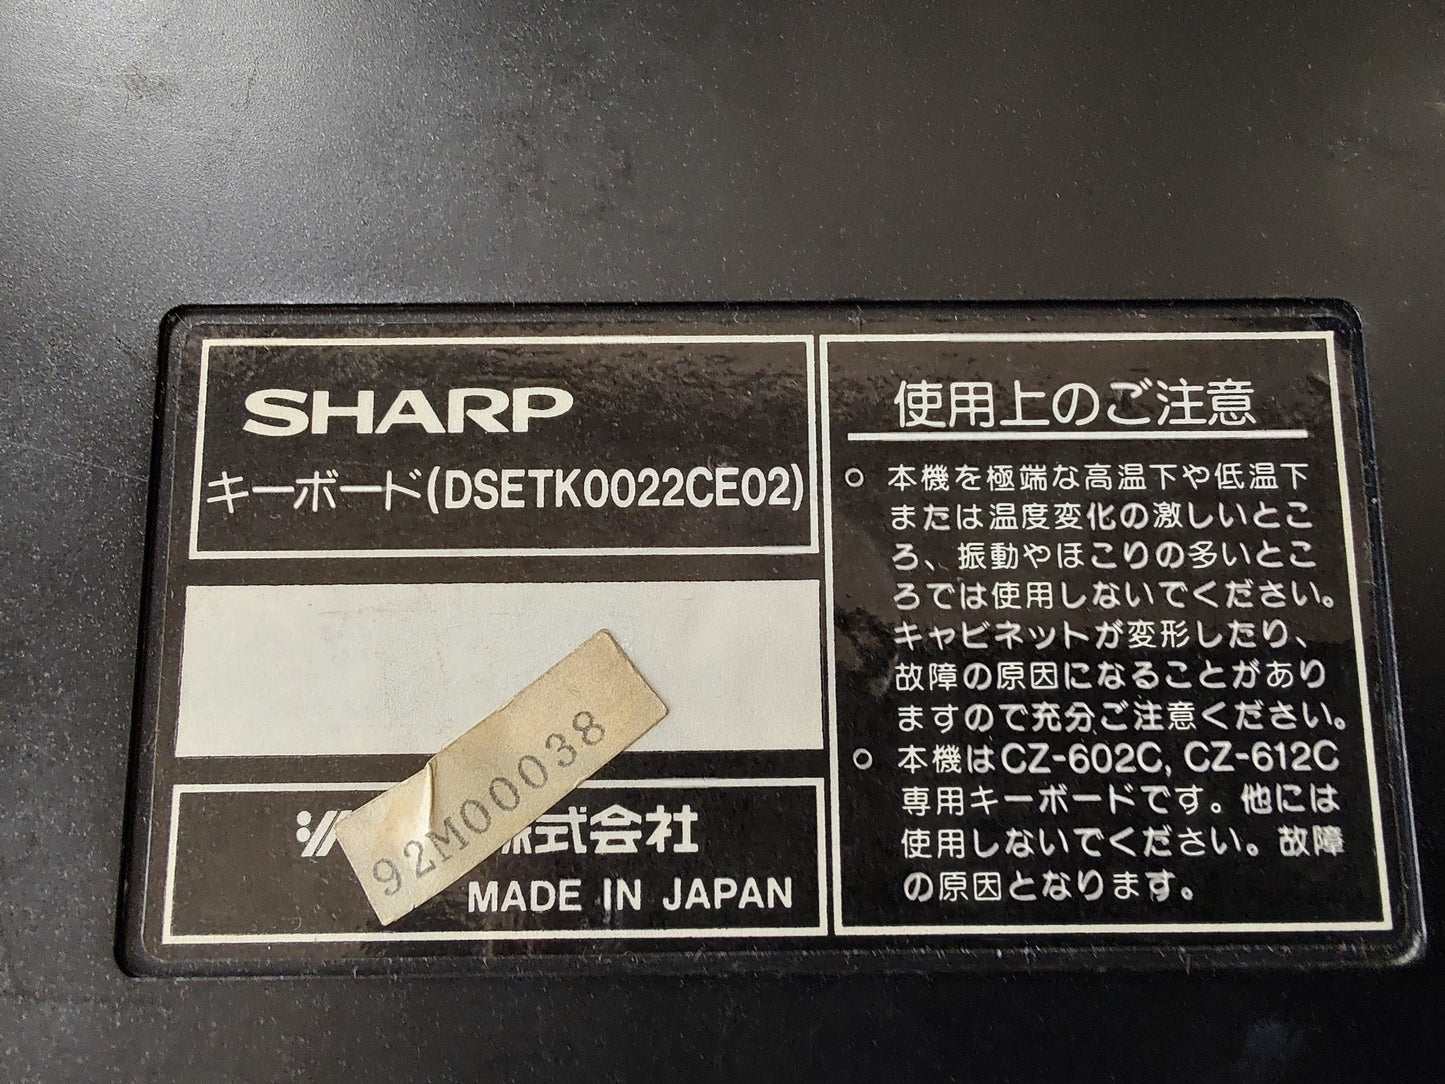 SHARP X68000 Original KEYBOARD DSETK0022CE02, Working-f0310-